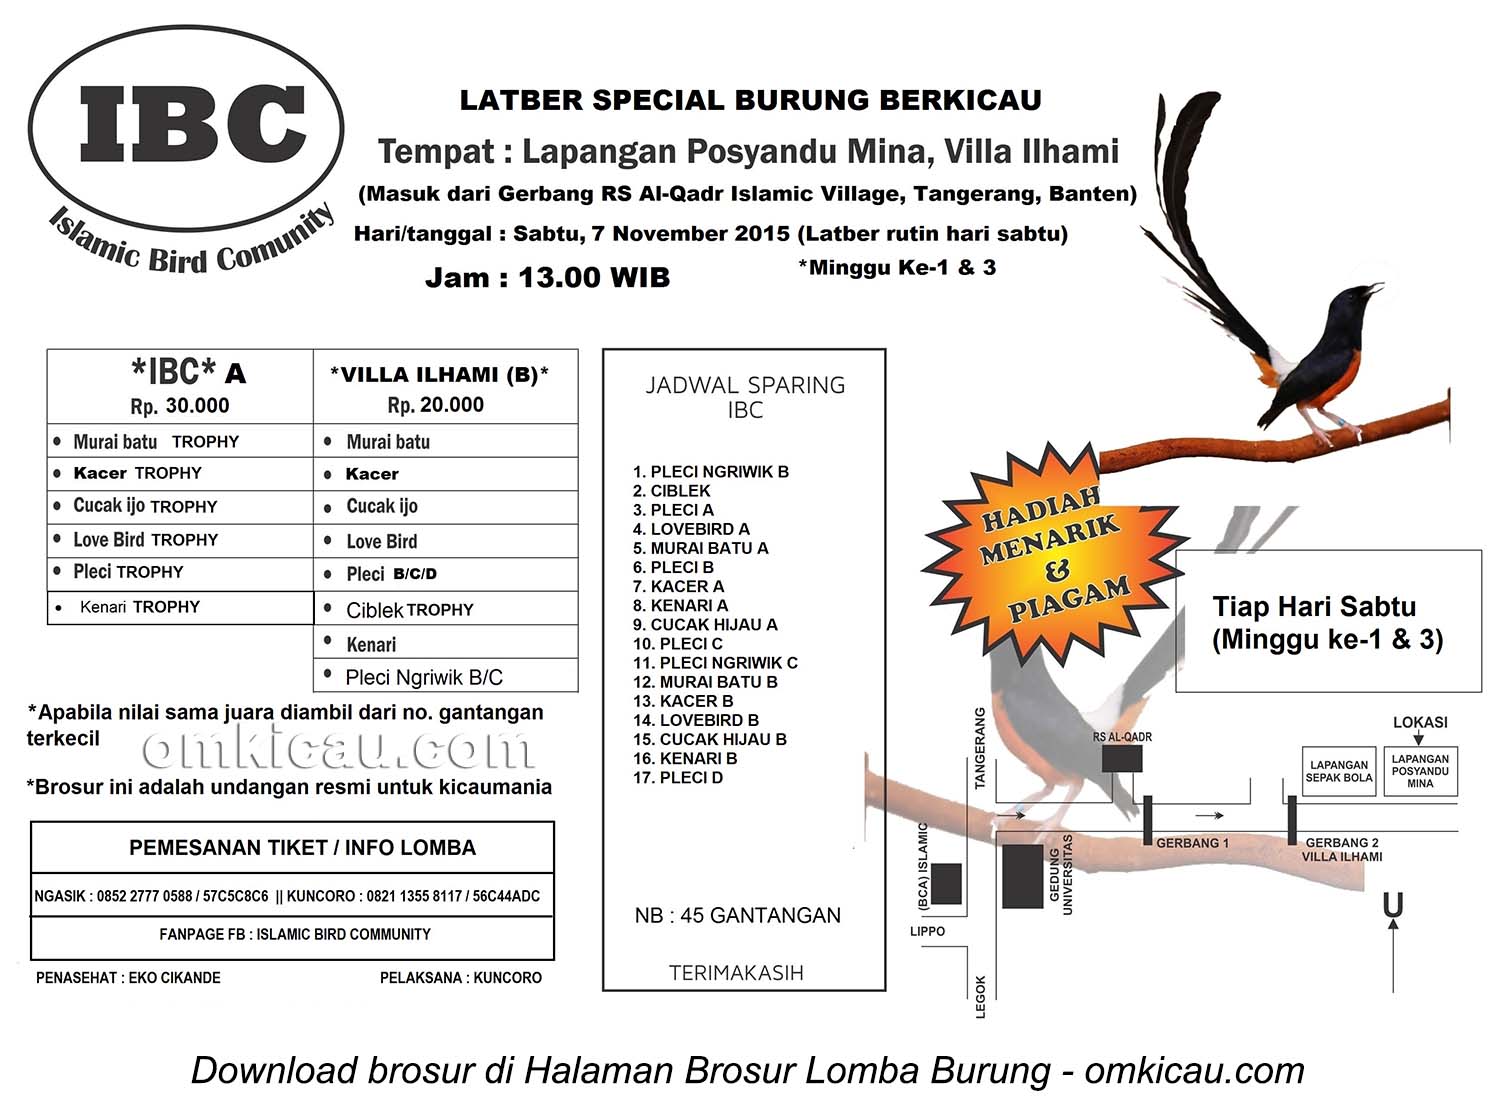 Brosur Latber Special Burung Berkicau IBC, Tangerang, 7 November 2015